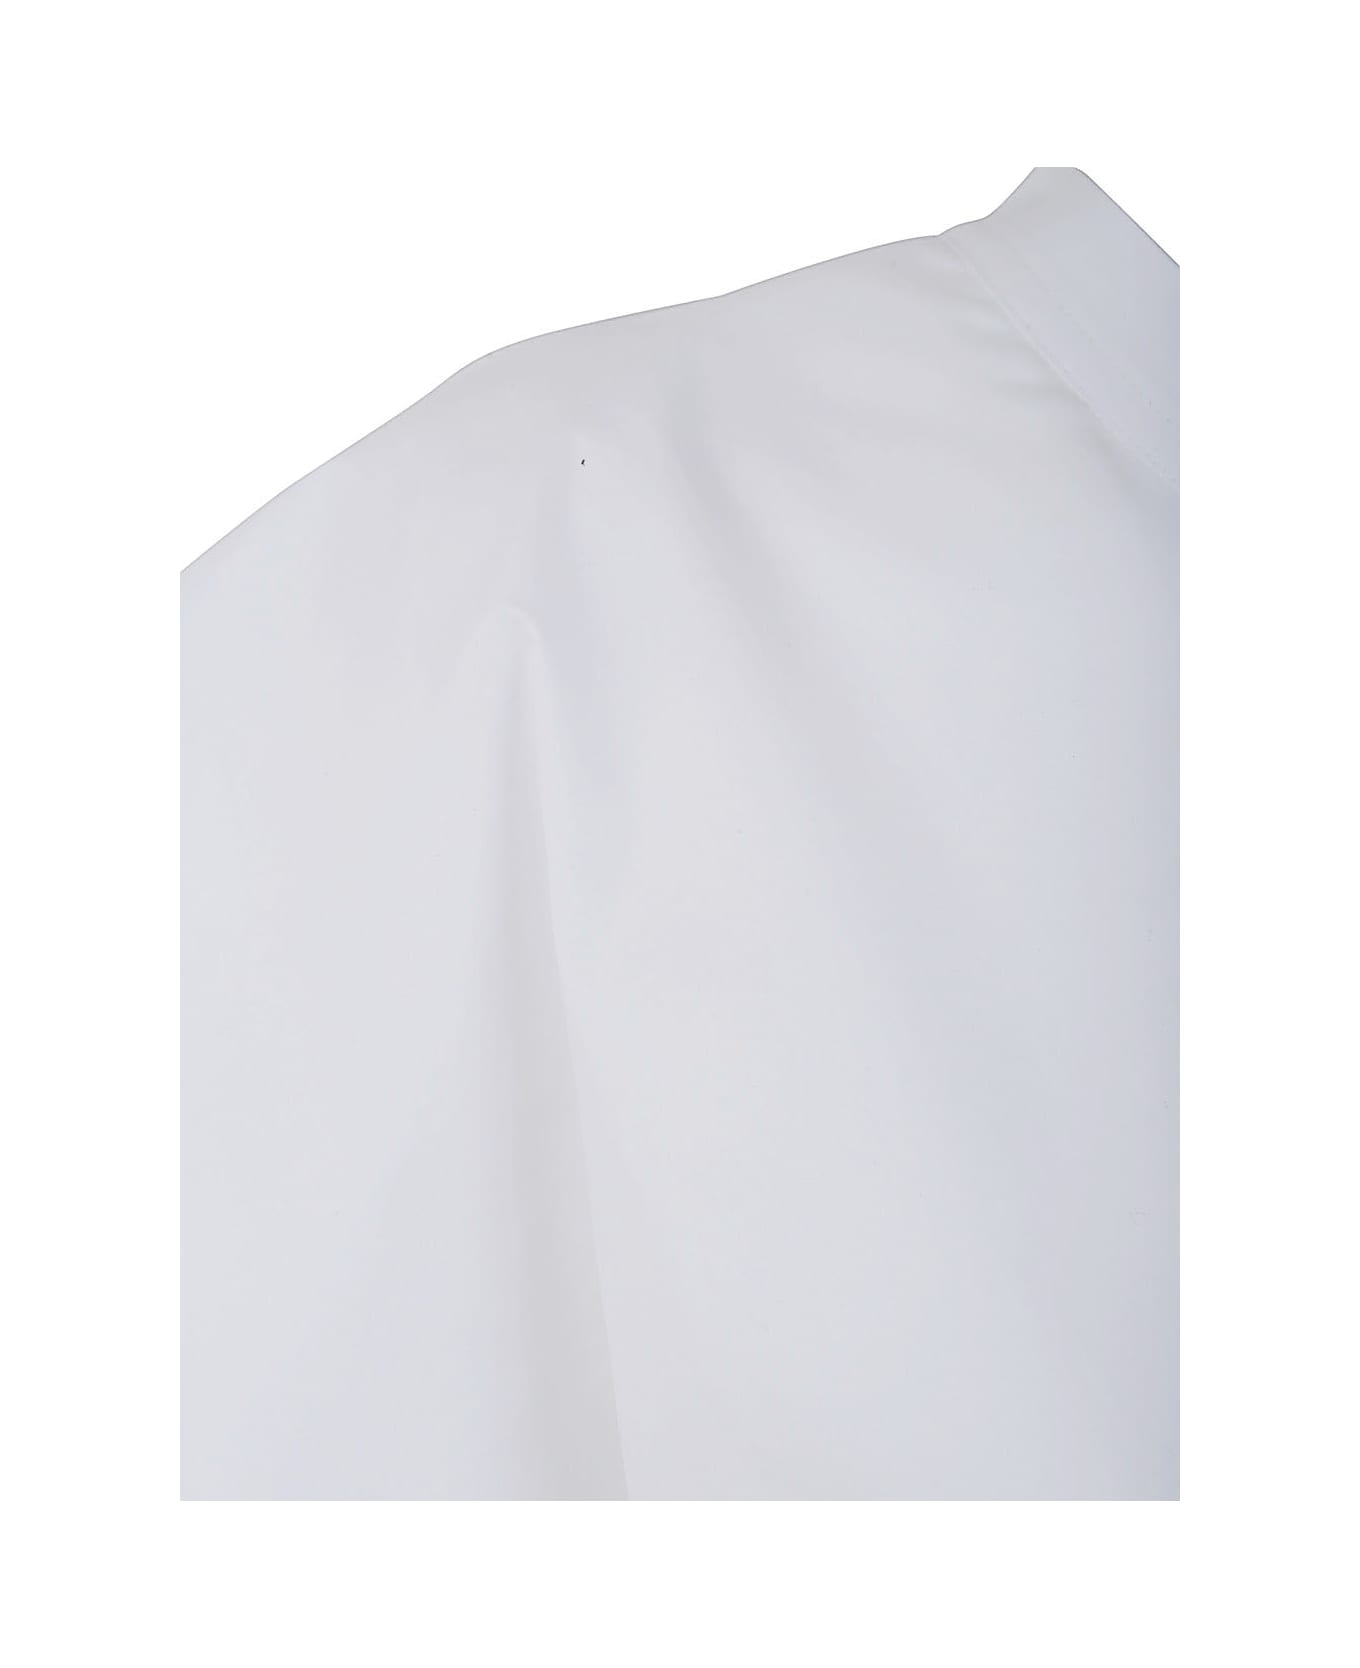 Sofie d'Hoore Top With Short Reversed Sleeves - White